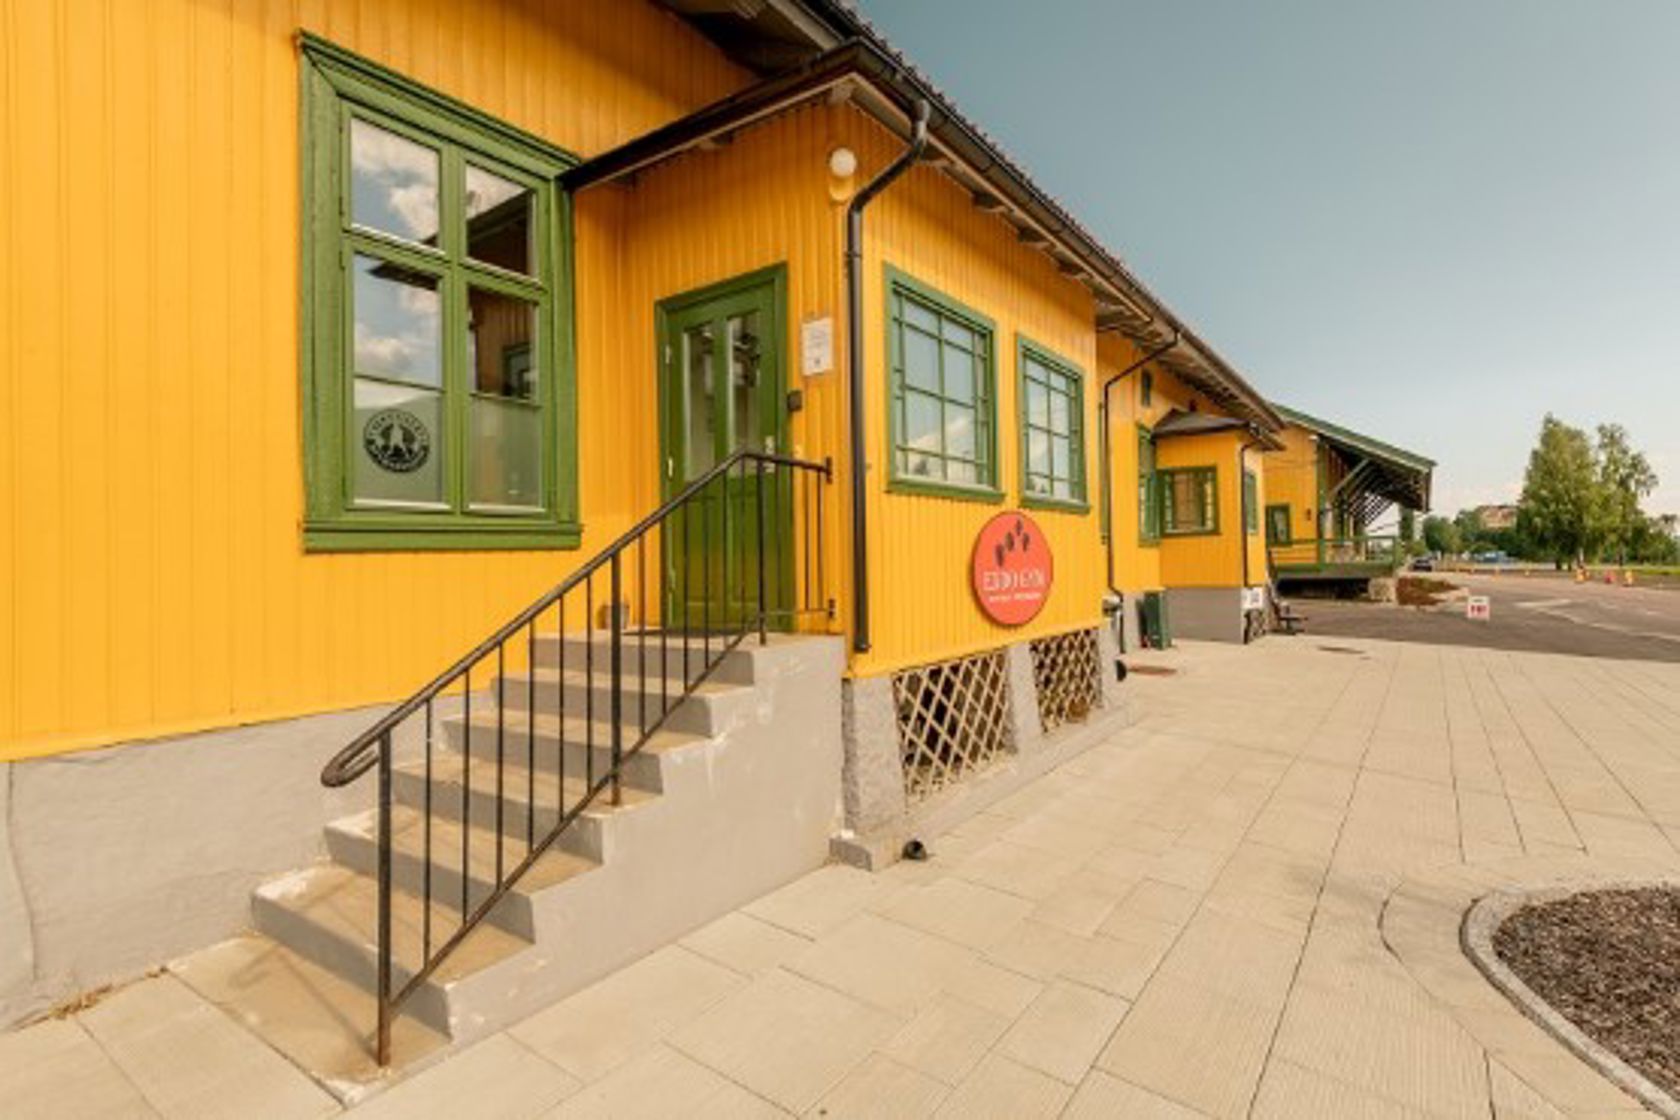 Exterior view of Vikersund station